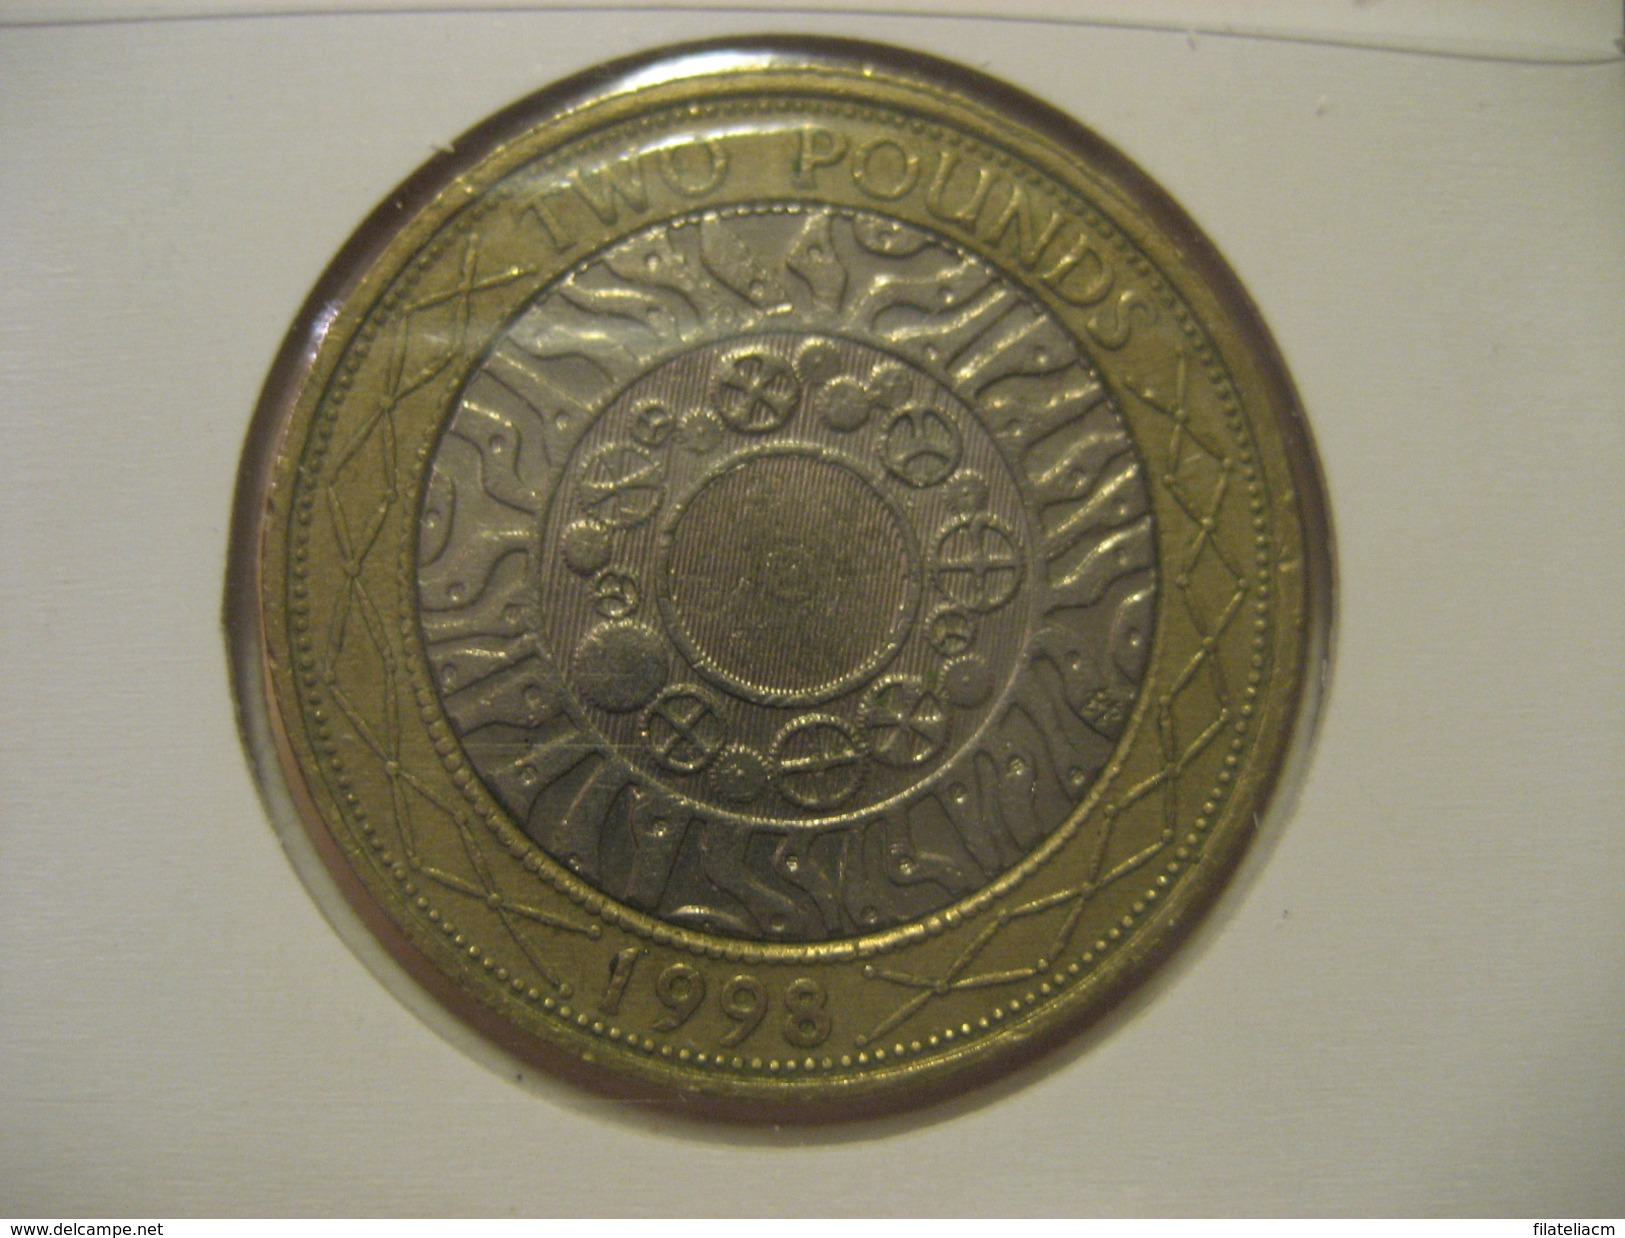 2 Pounds 1998 ENGLAND Great Britain QE II Bimetallic Coin - 2 Pond